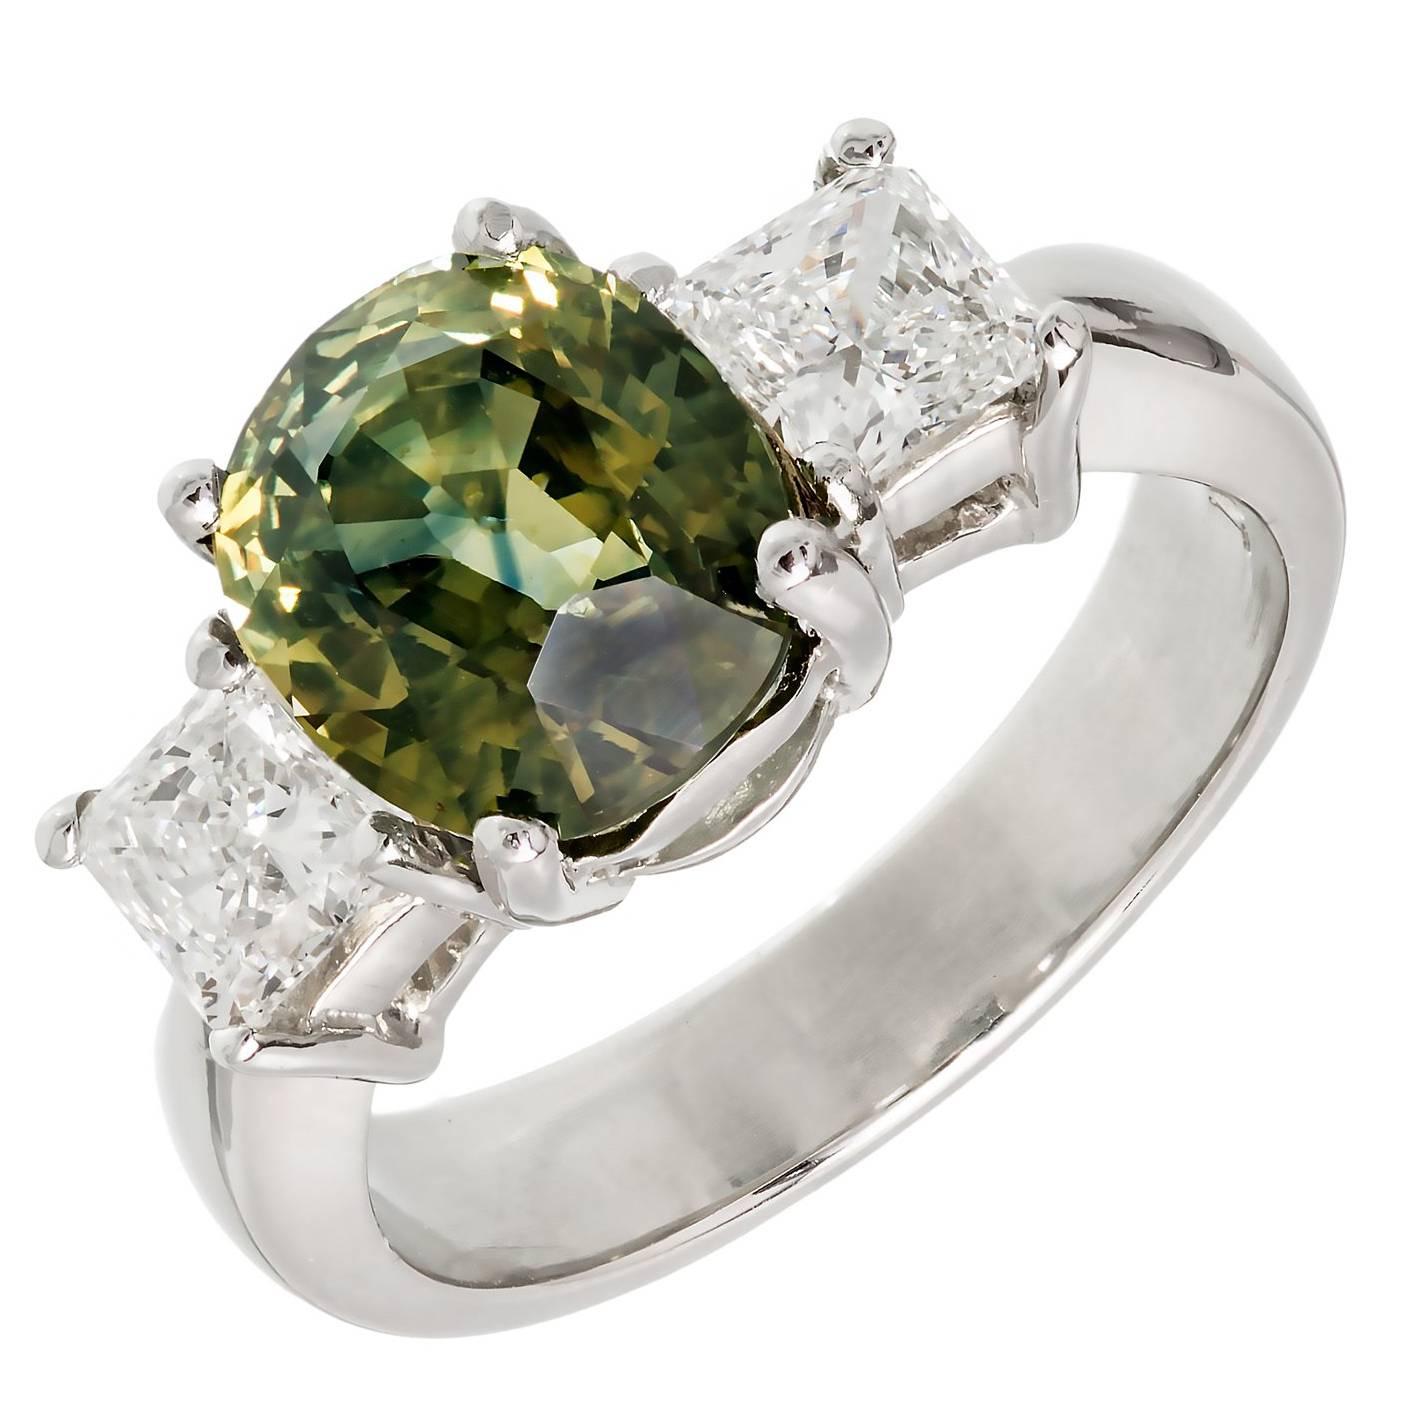 Peter Suchy GIA 3.05 Carat Green Sapphire Diamond Platinum Engagement Ring